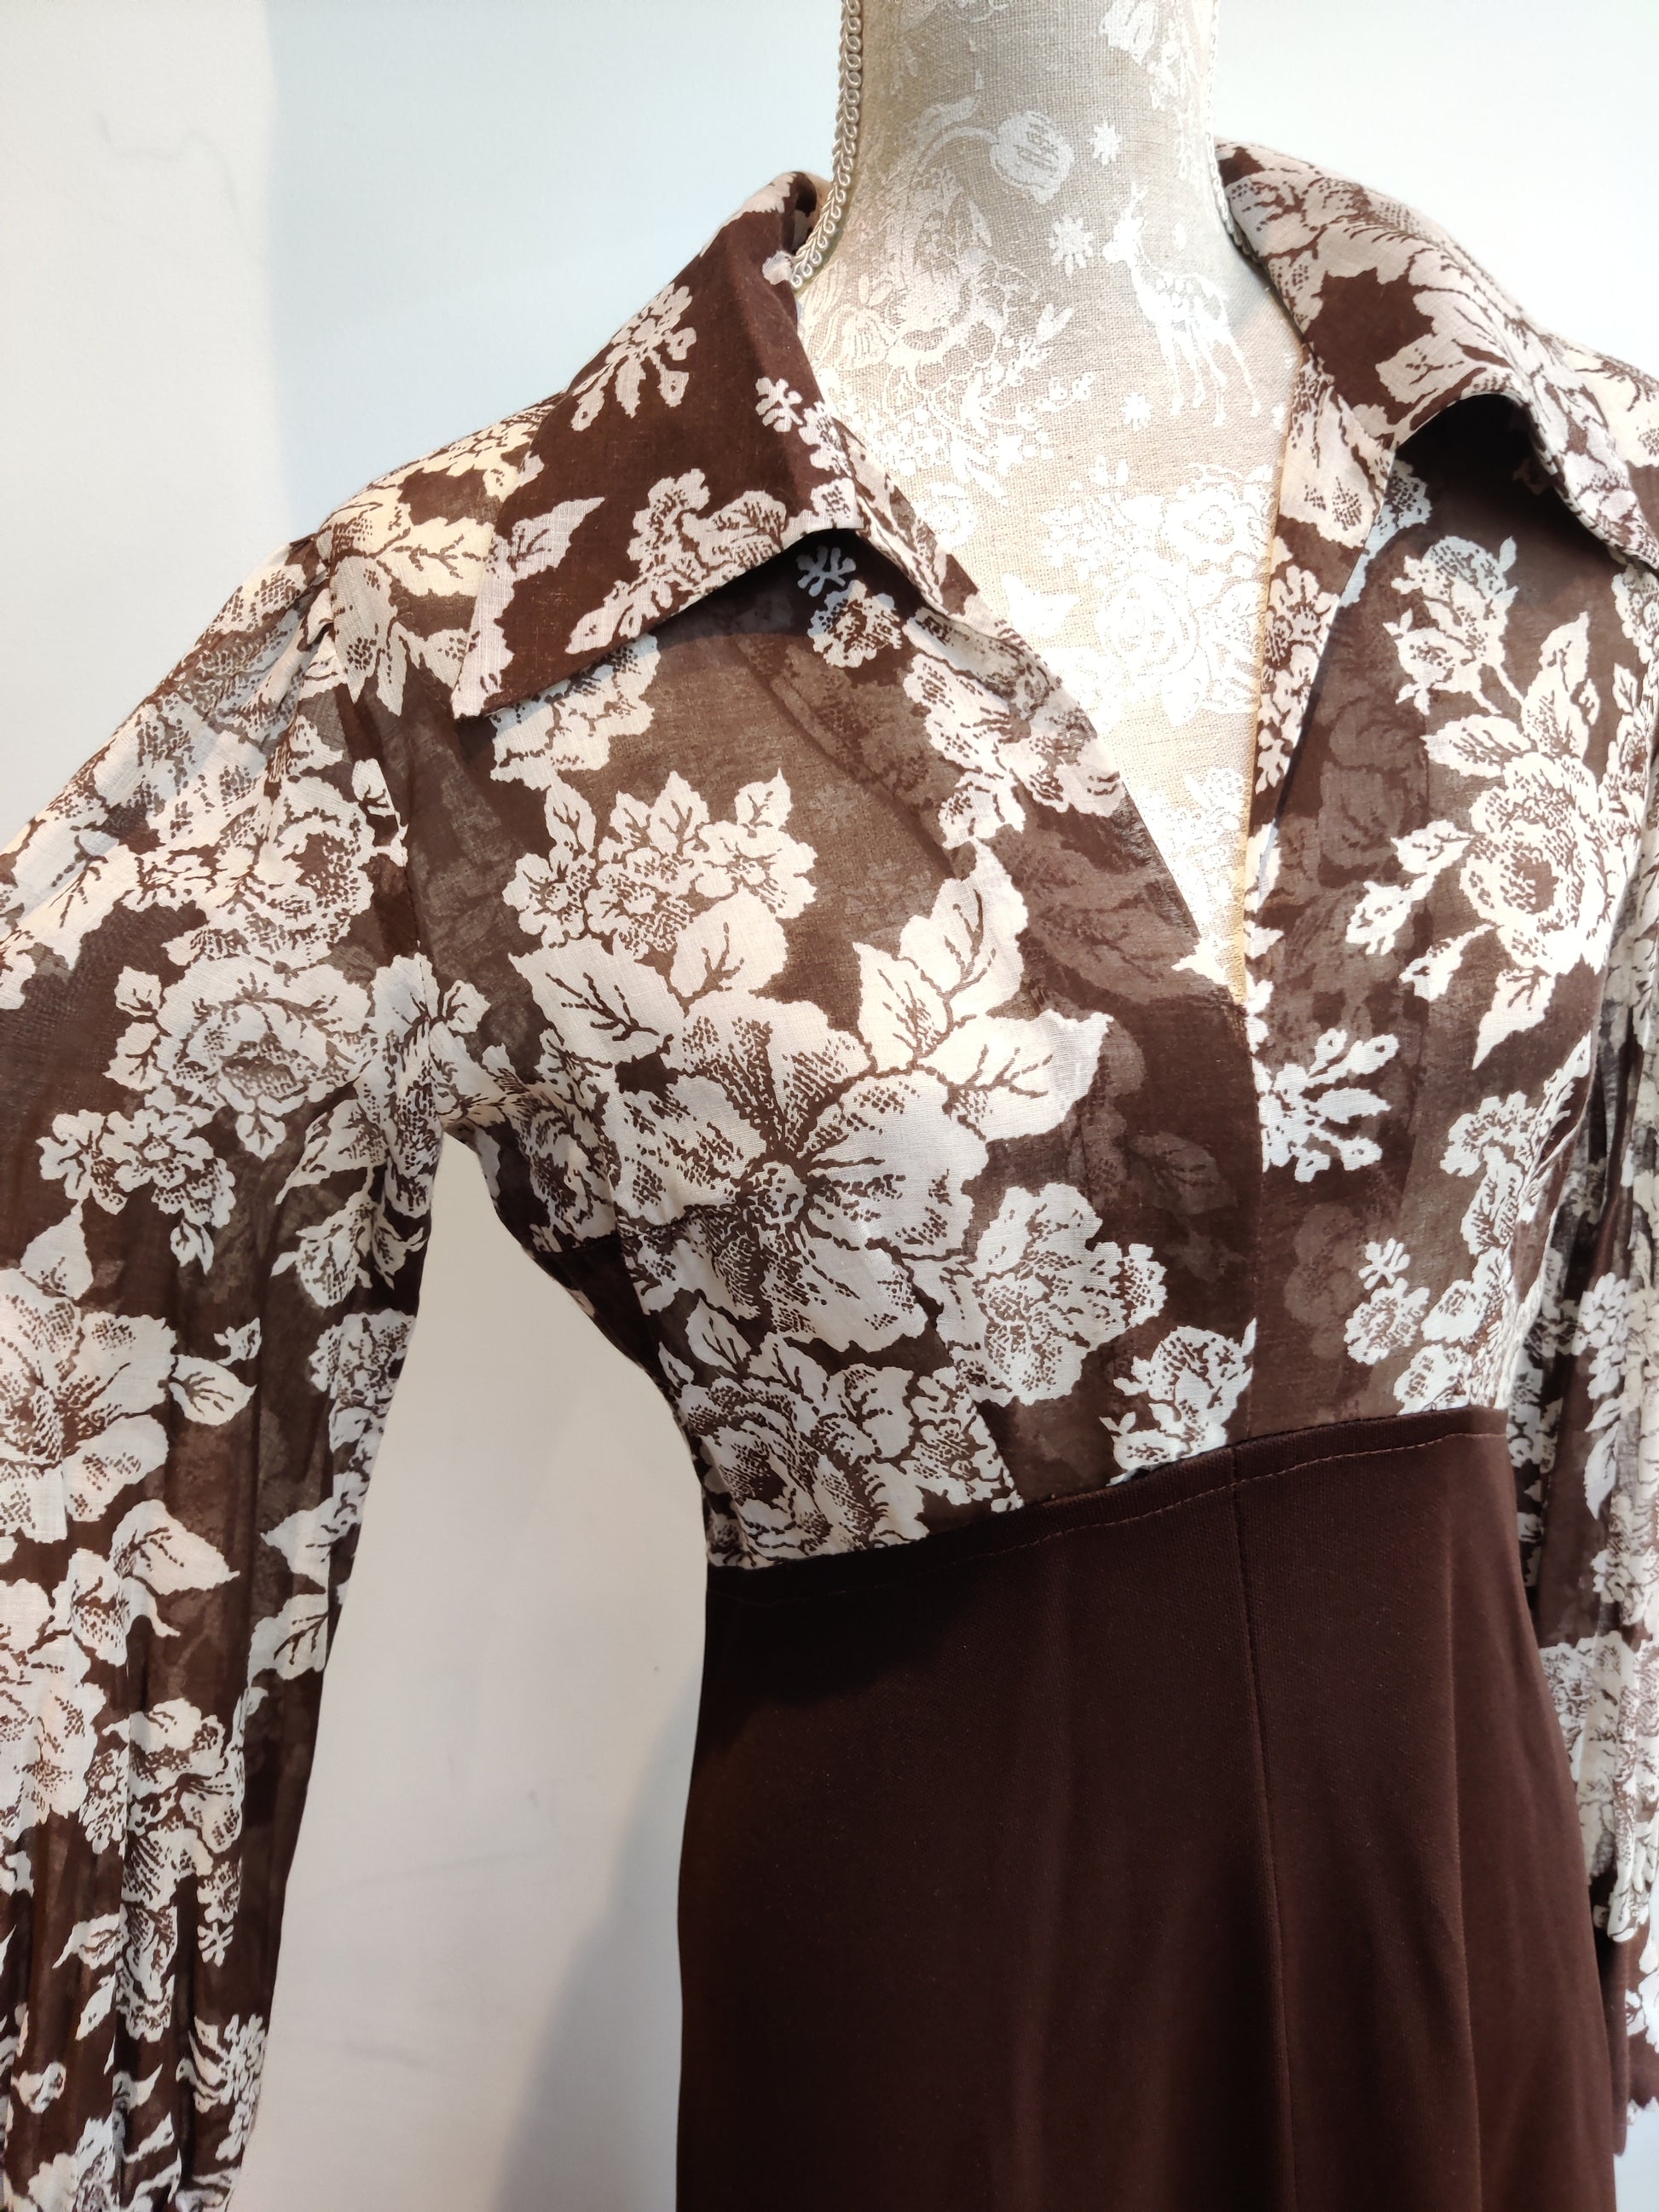 70s full length dress in brown floral print.